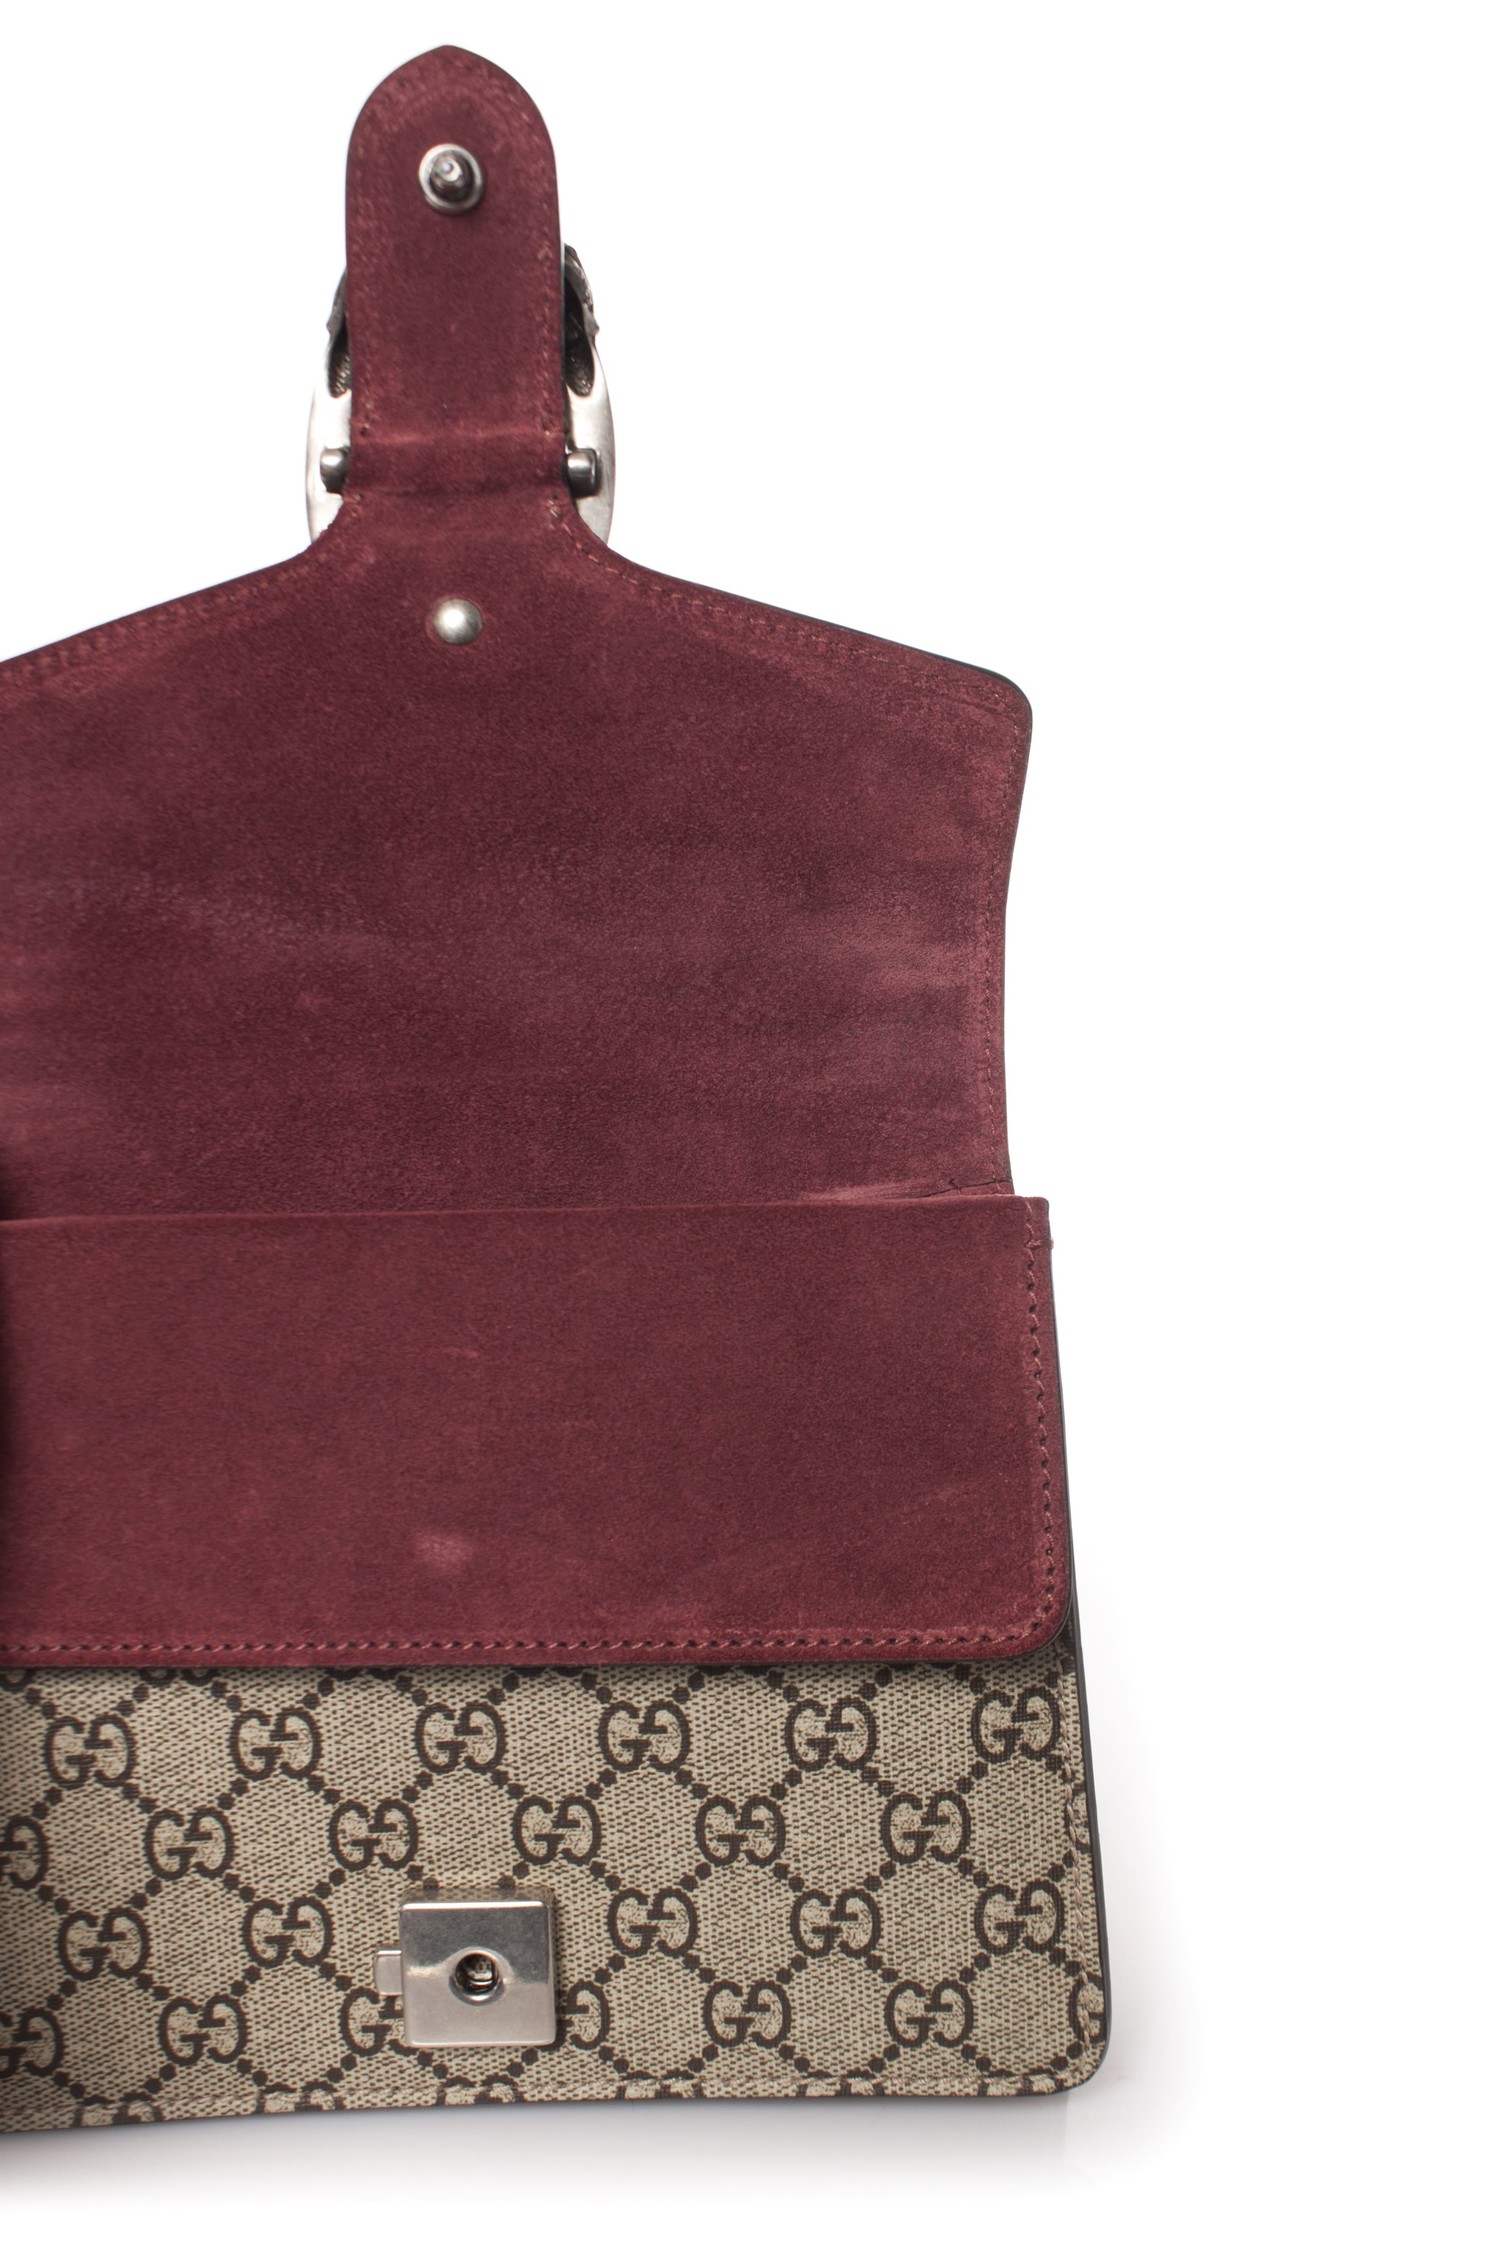 Gucci Dionysus GG Blooms Mini Bag in - Naughtipidgins Nest